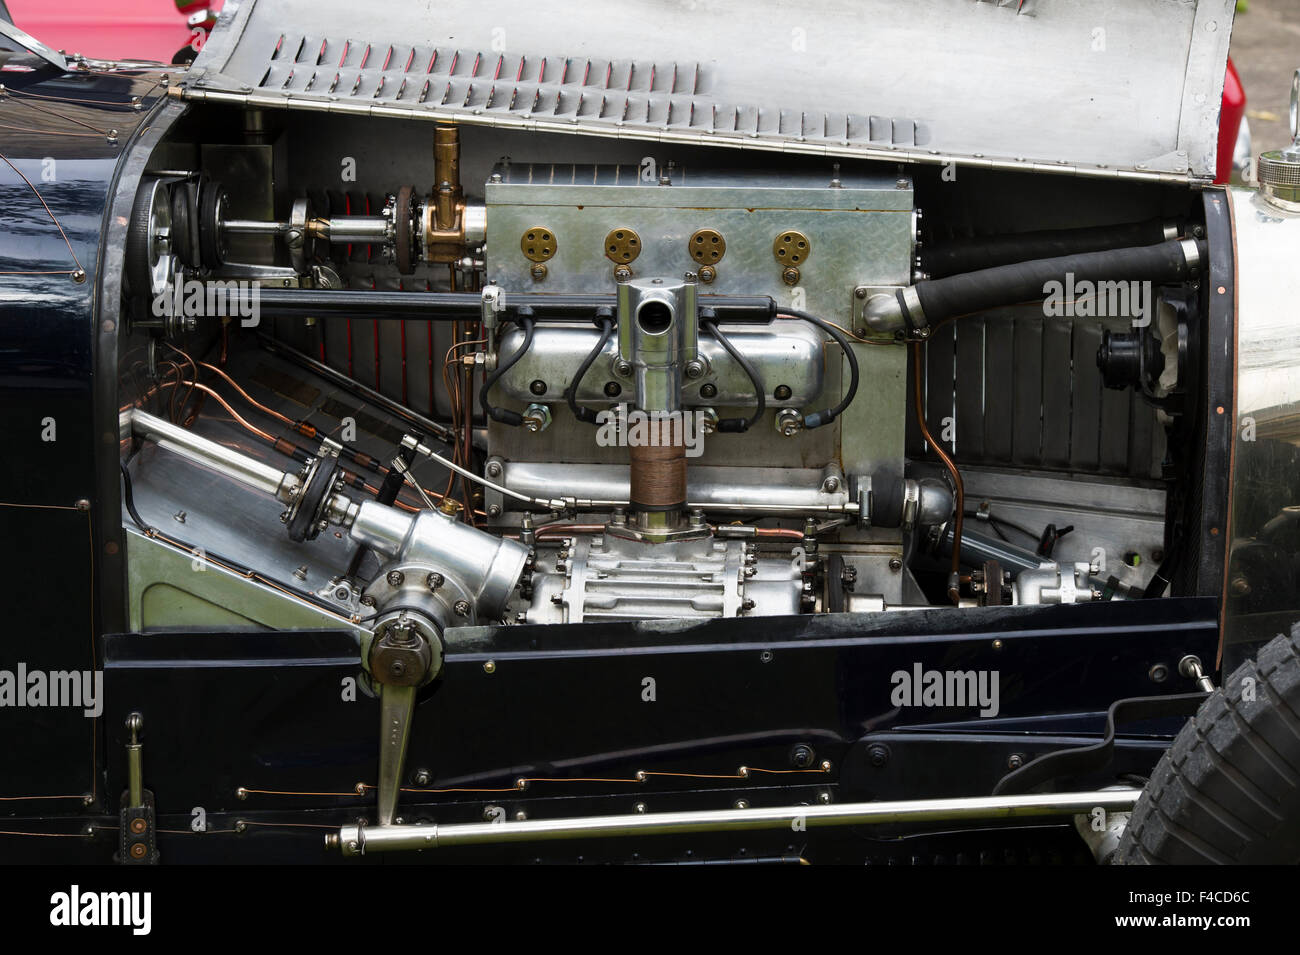 Bugatti type 34 racing car engine Stock Photo - Alamy